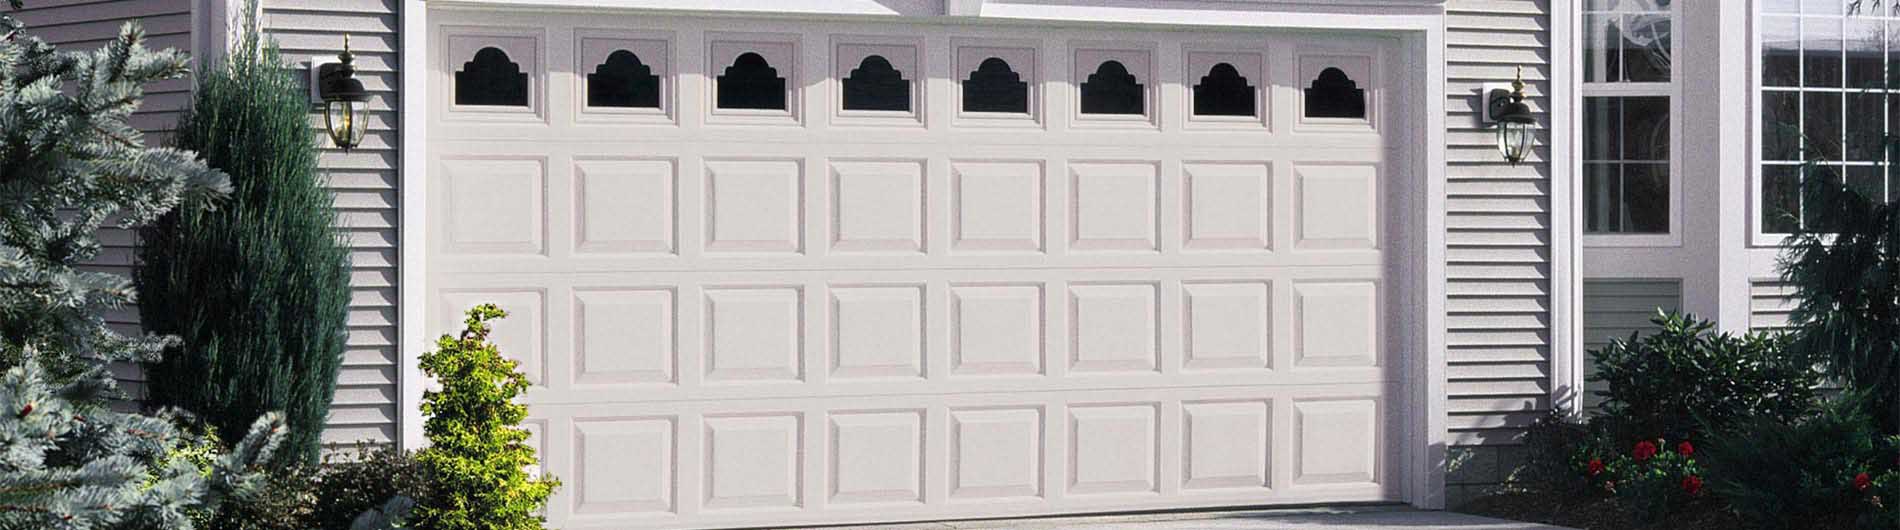 wayne dalton white vinyl garage door with decorative windows